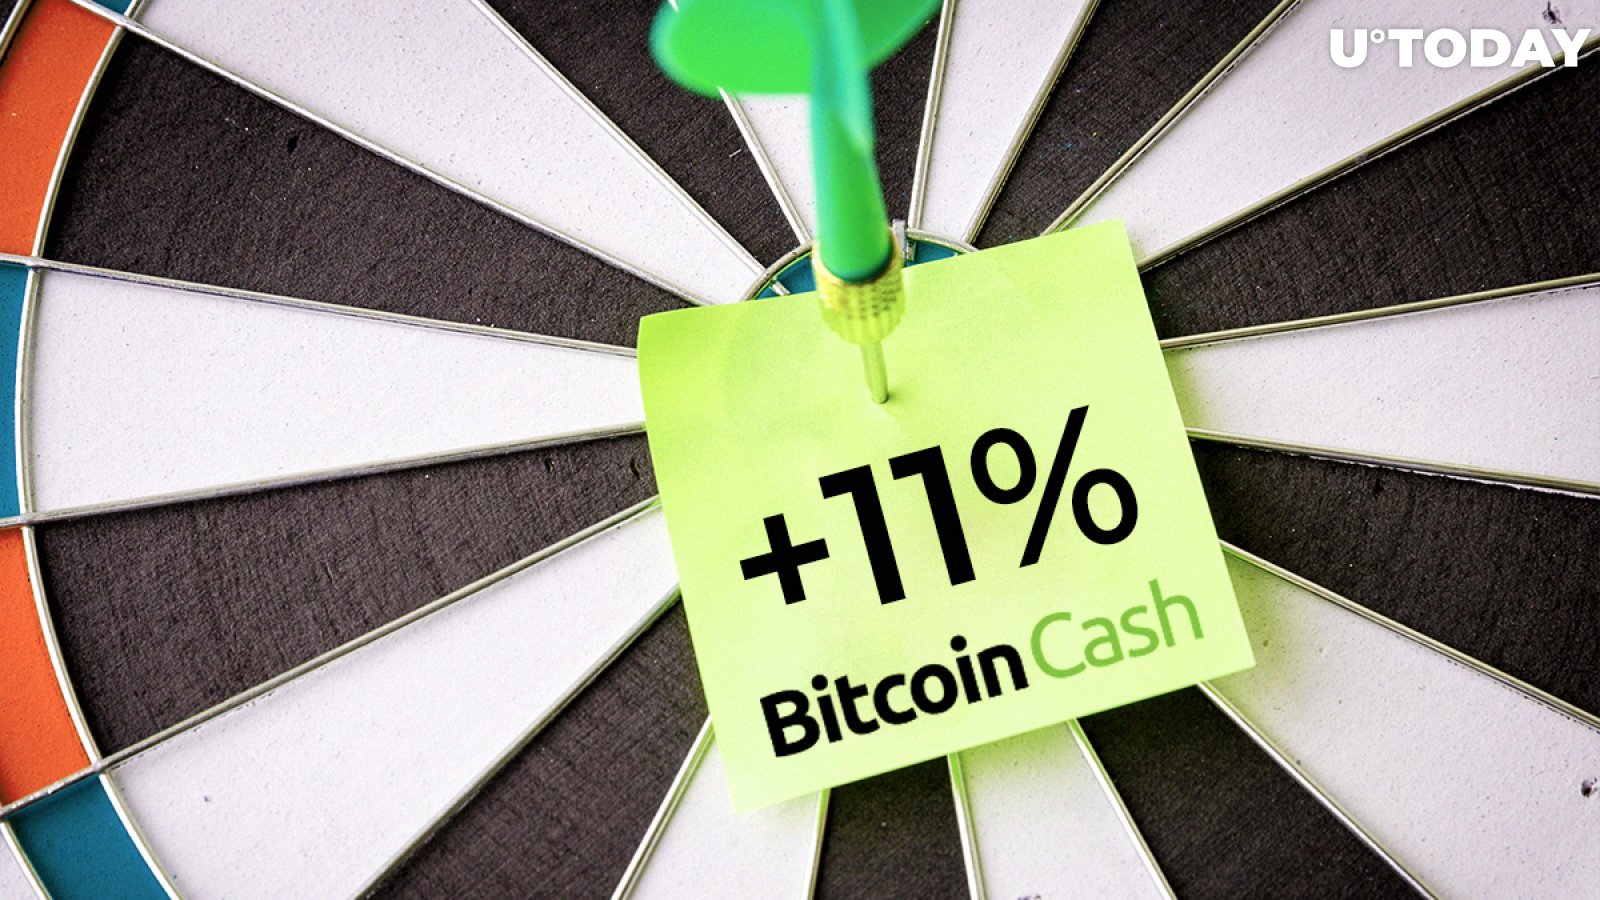 Bitcoin Cash Pumps Over 11 Percent - Will Bullish Wave Continue?